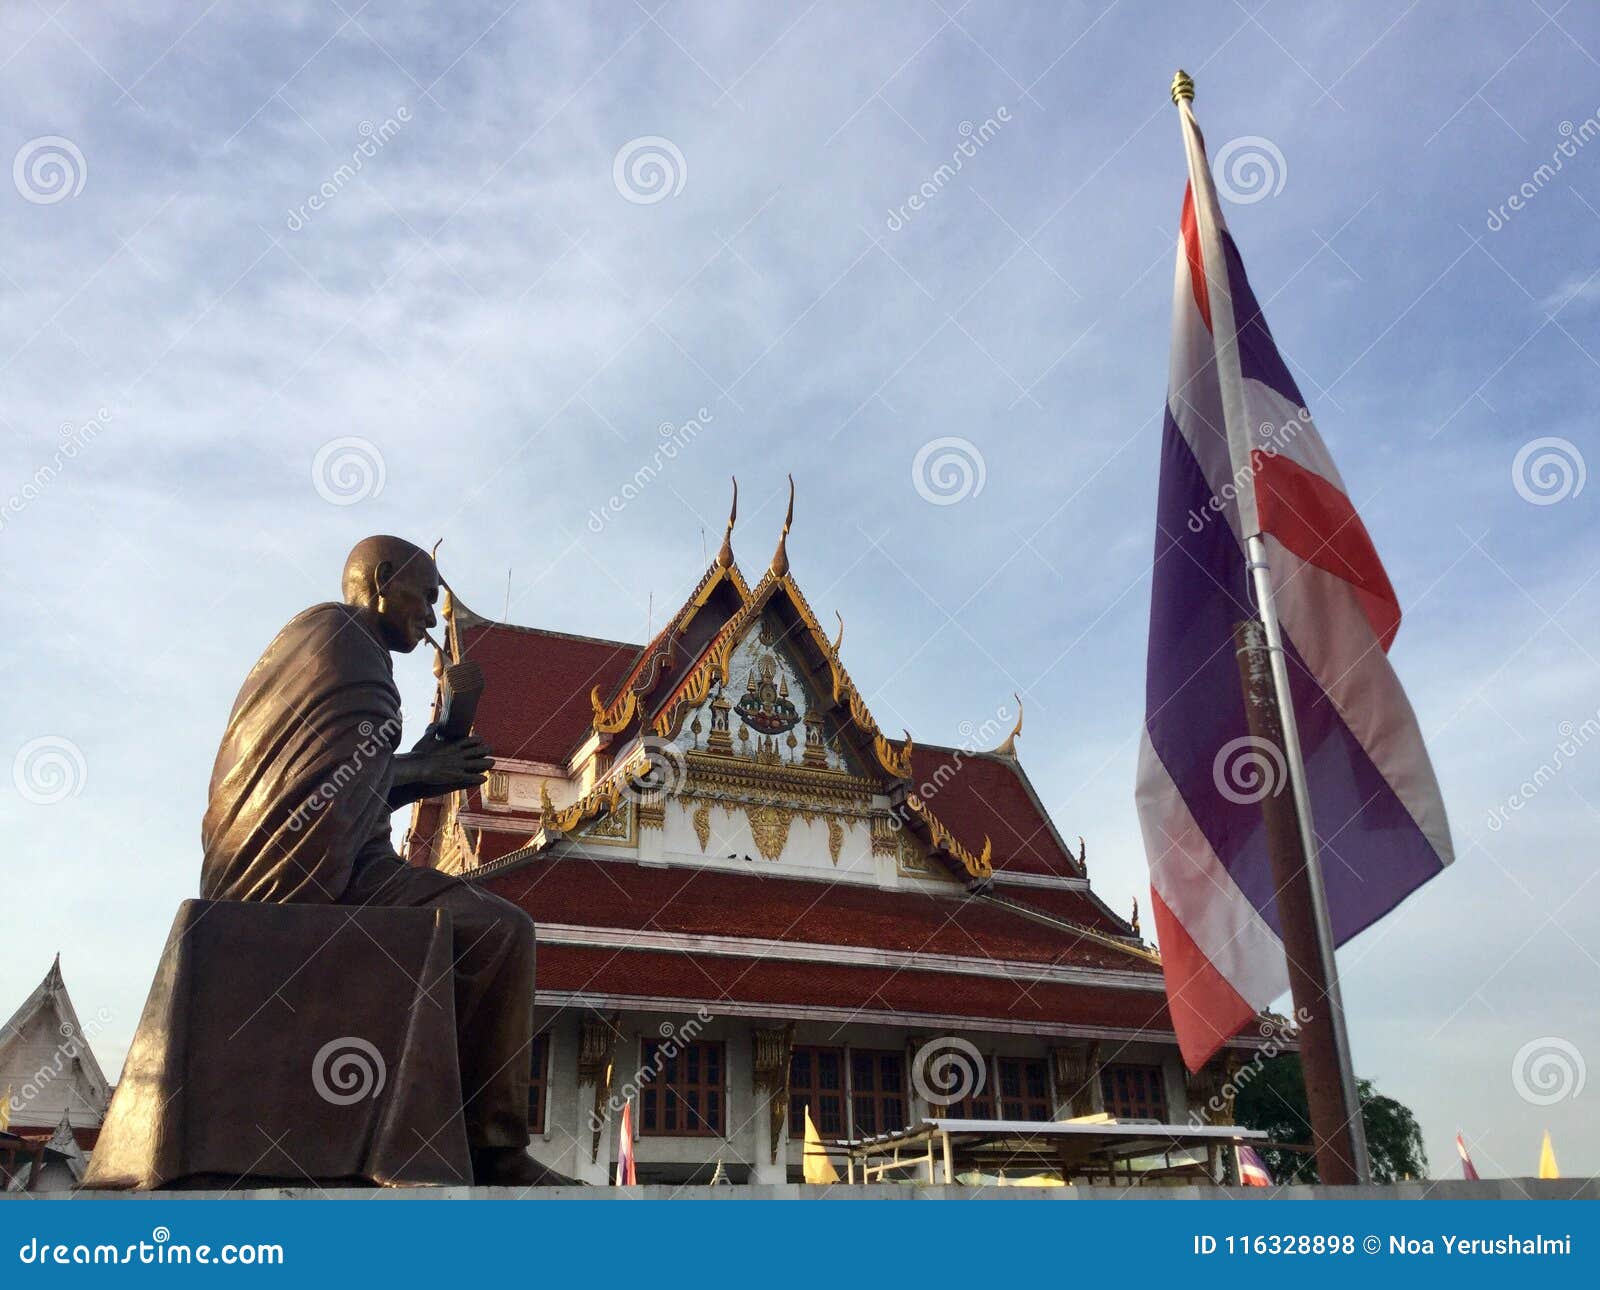 thai temple cleaning , bangkok